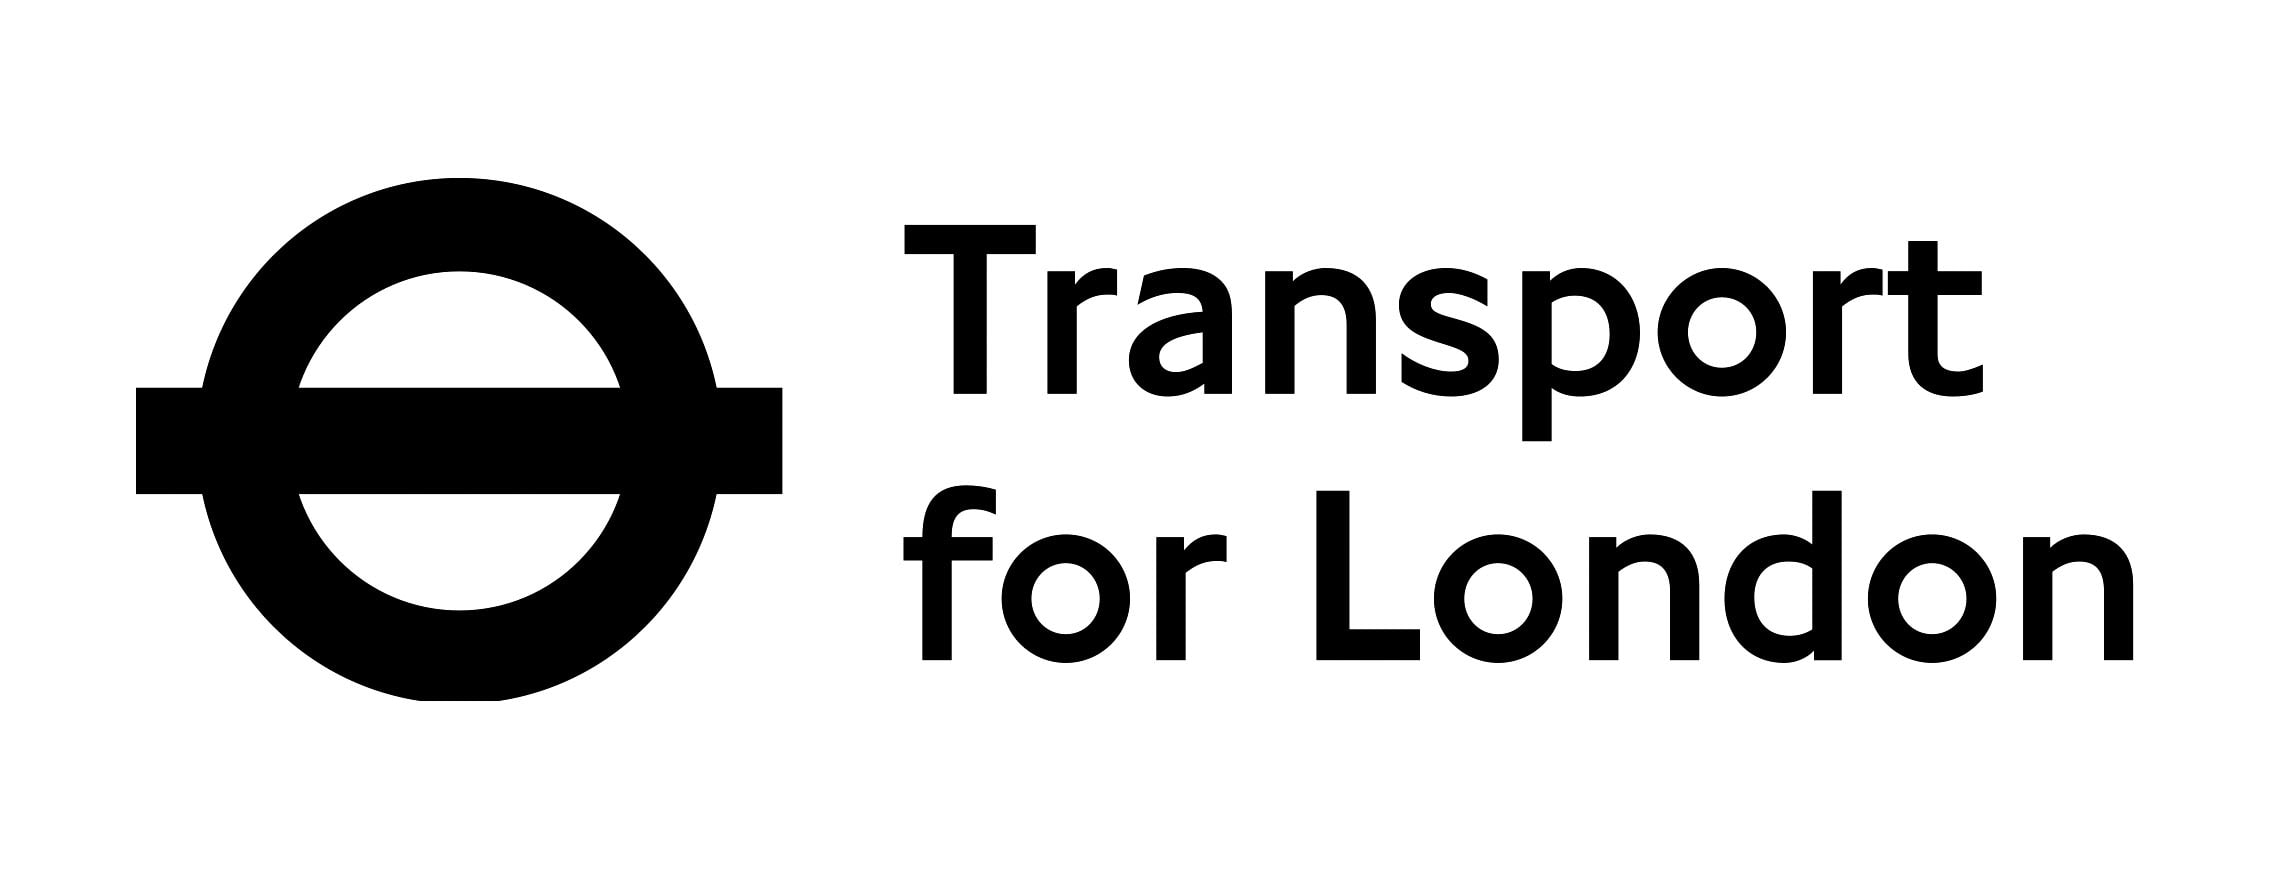 TfL-logo